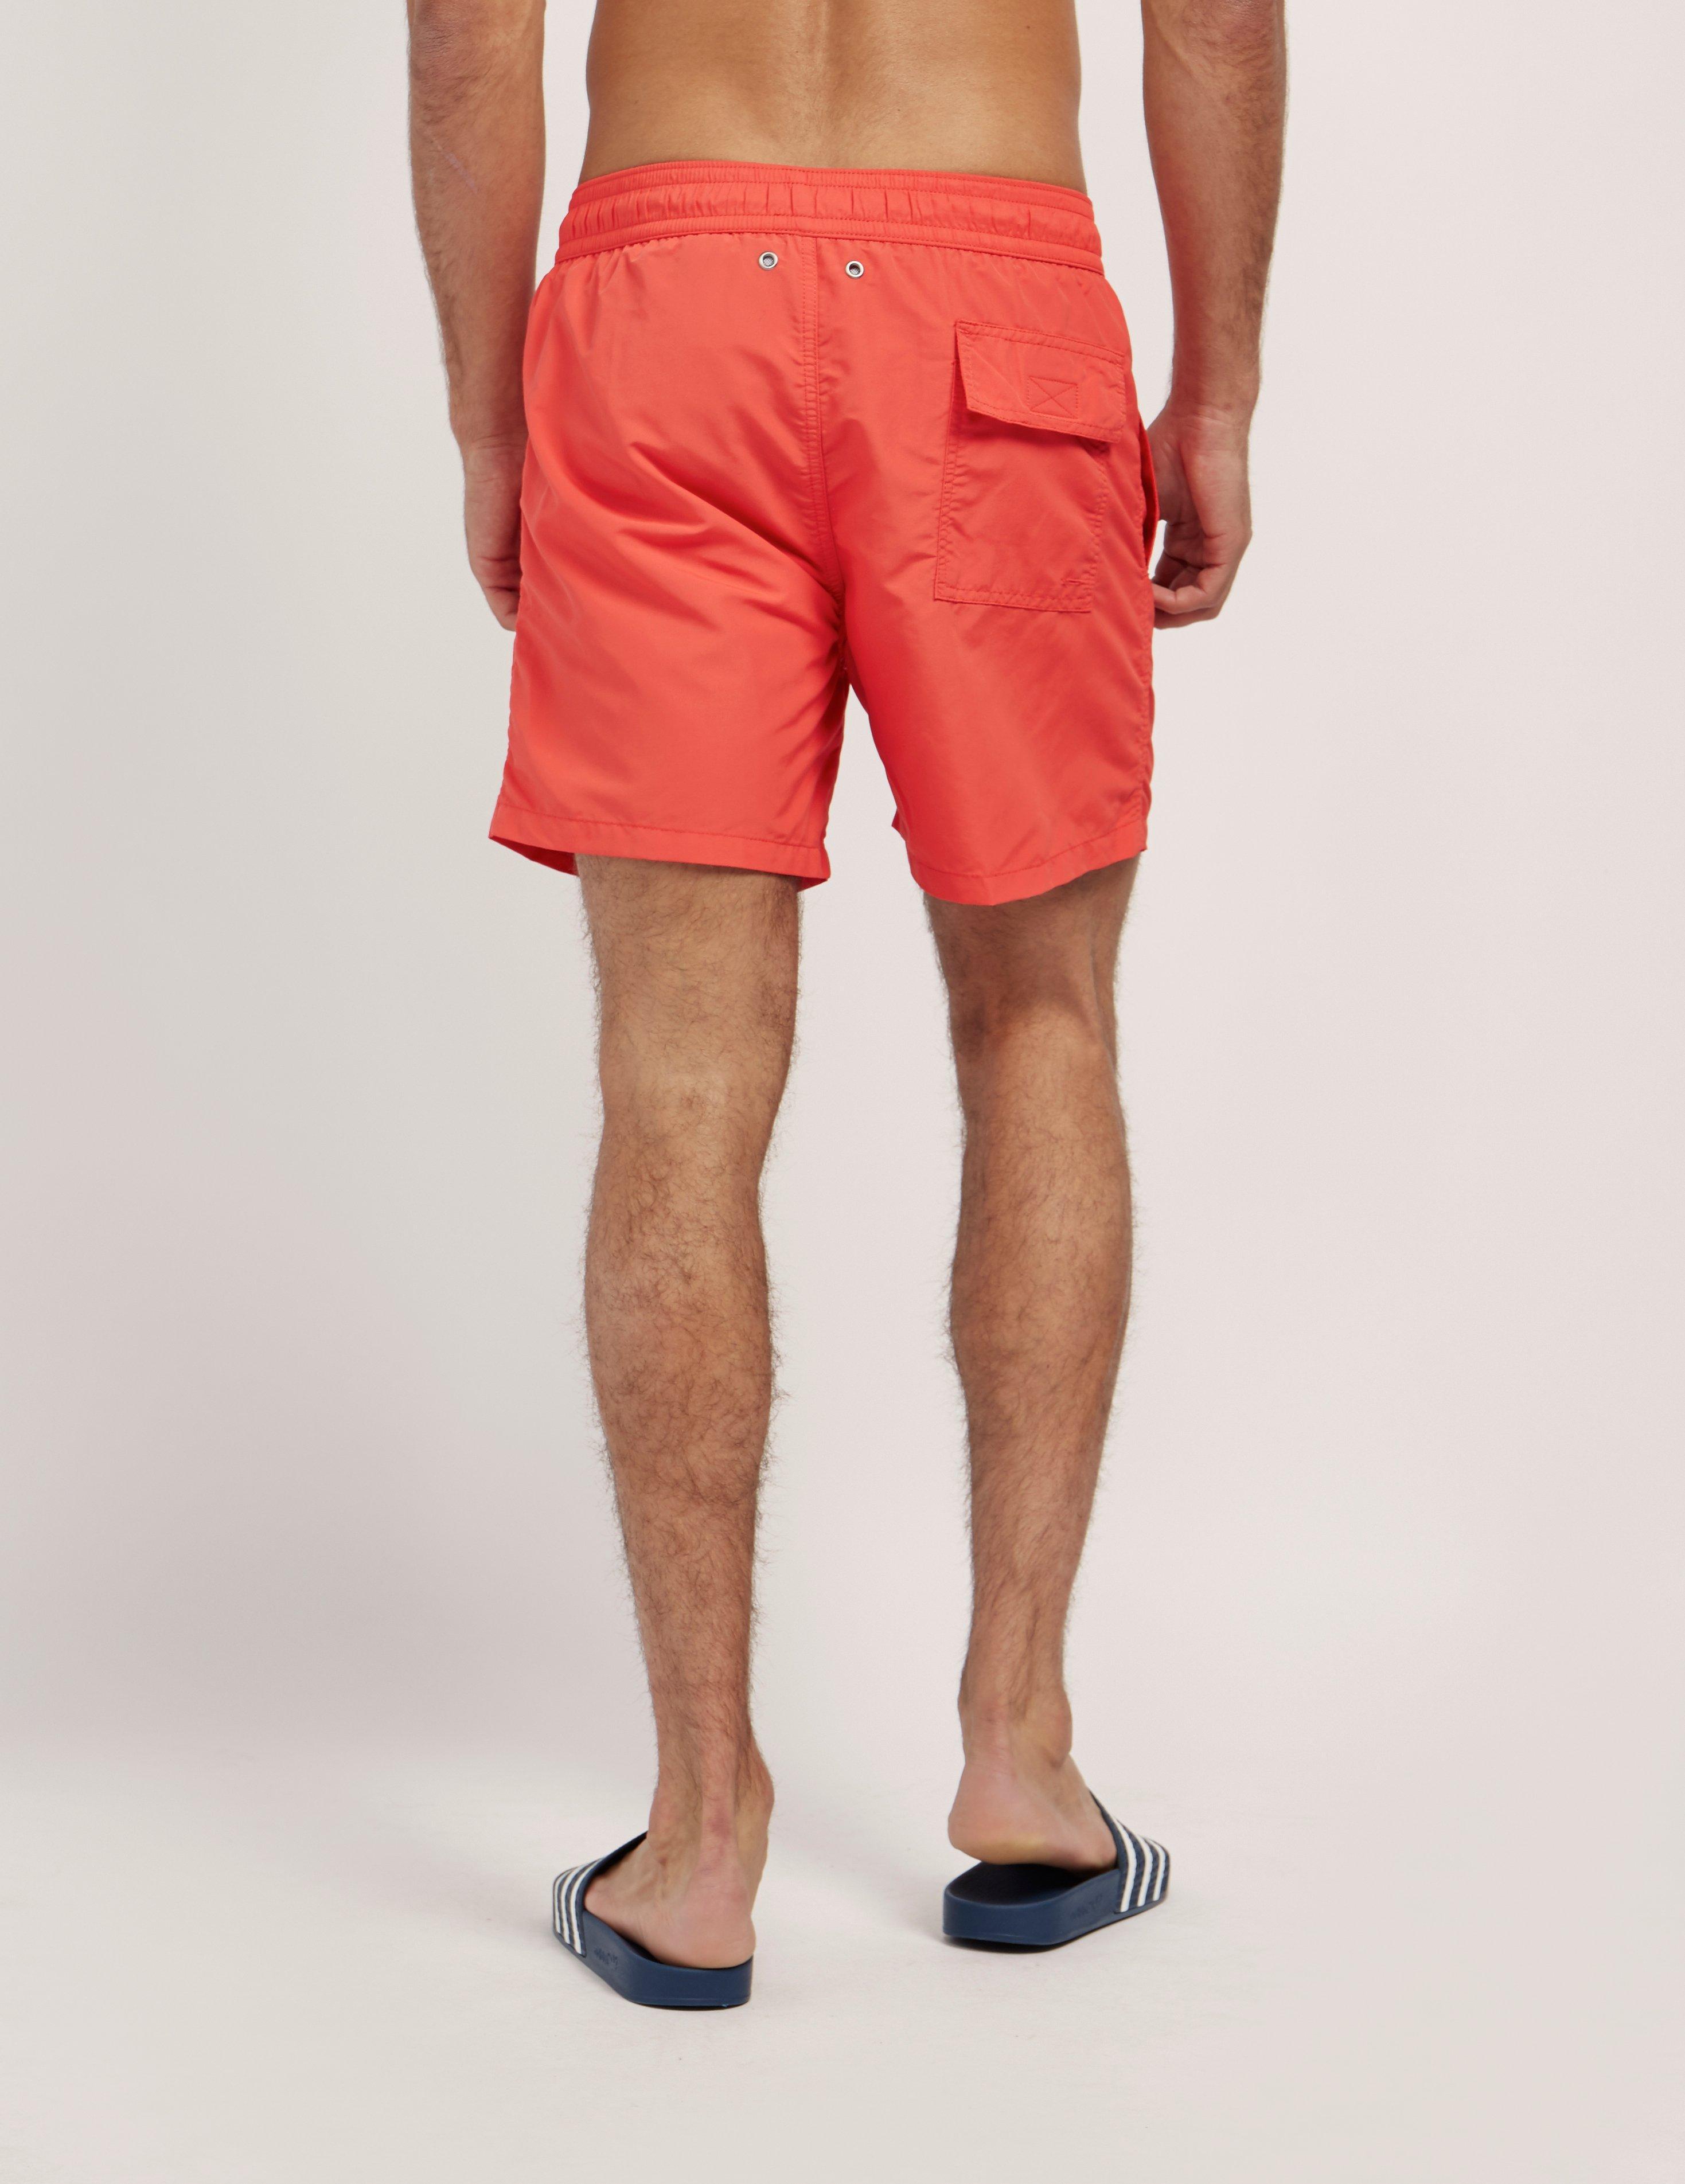 Lyst - Polo Ralph Lauren Hawaiian Shorts in Orange for Men